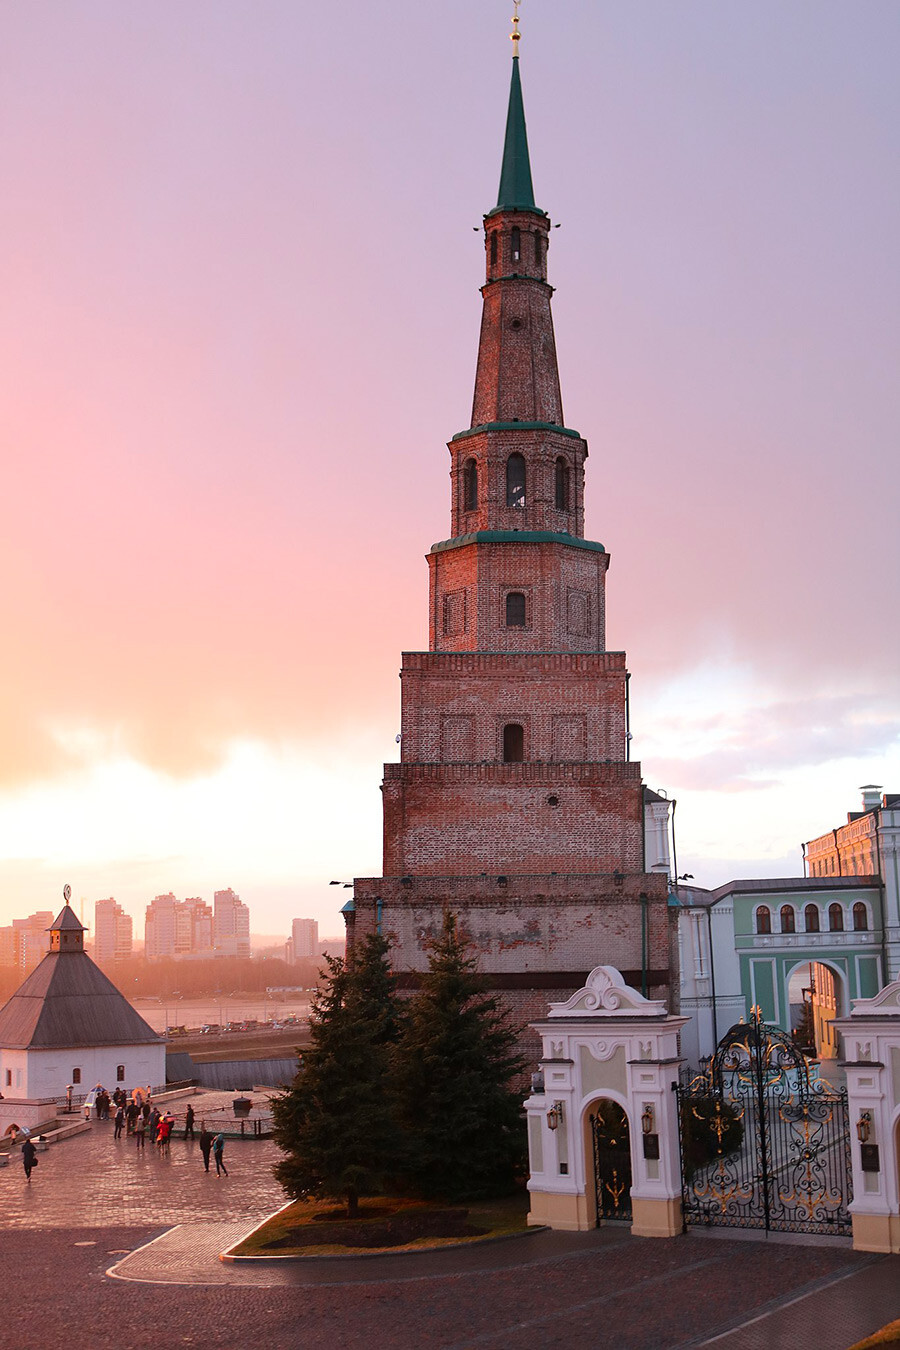 La torre Söyembikä a Kazan

